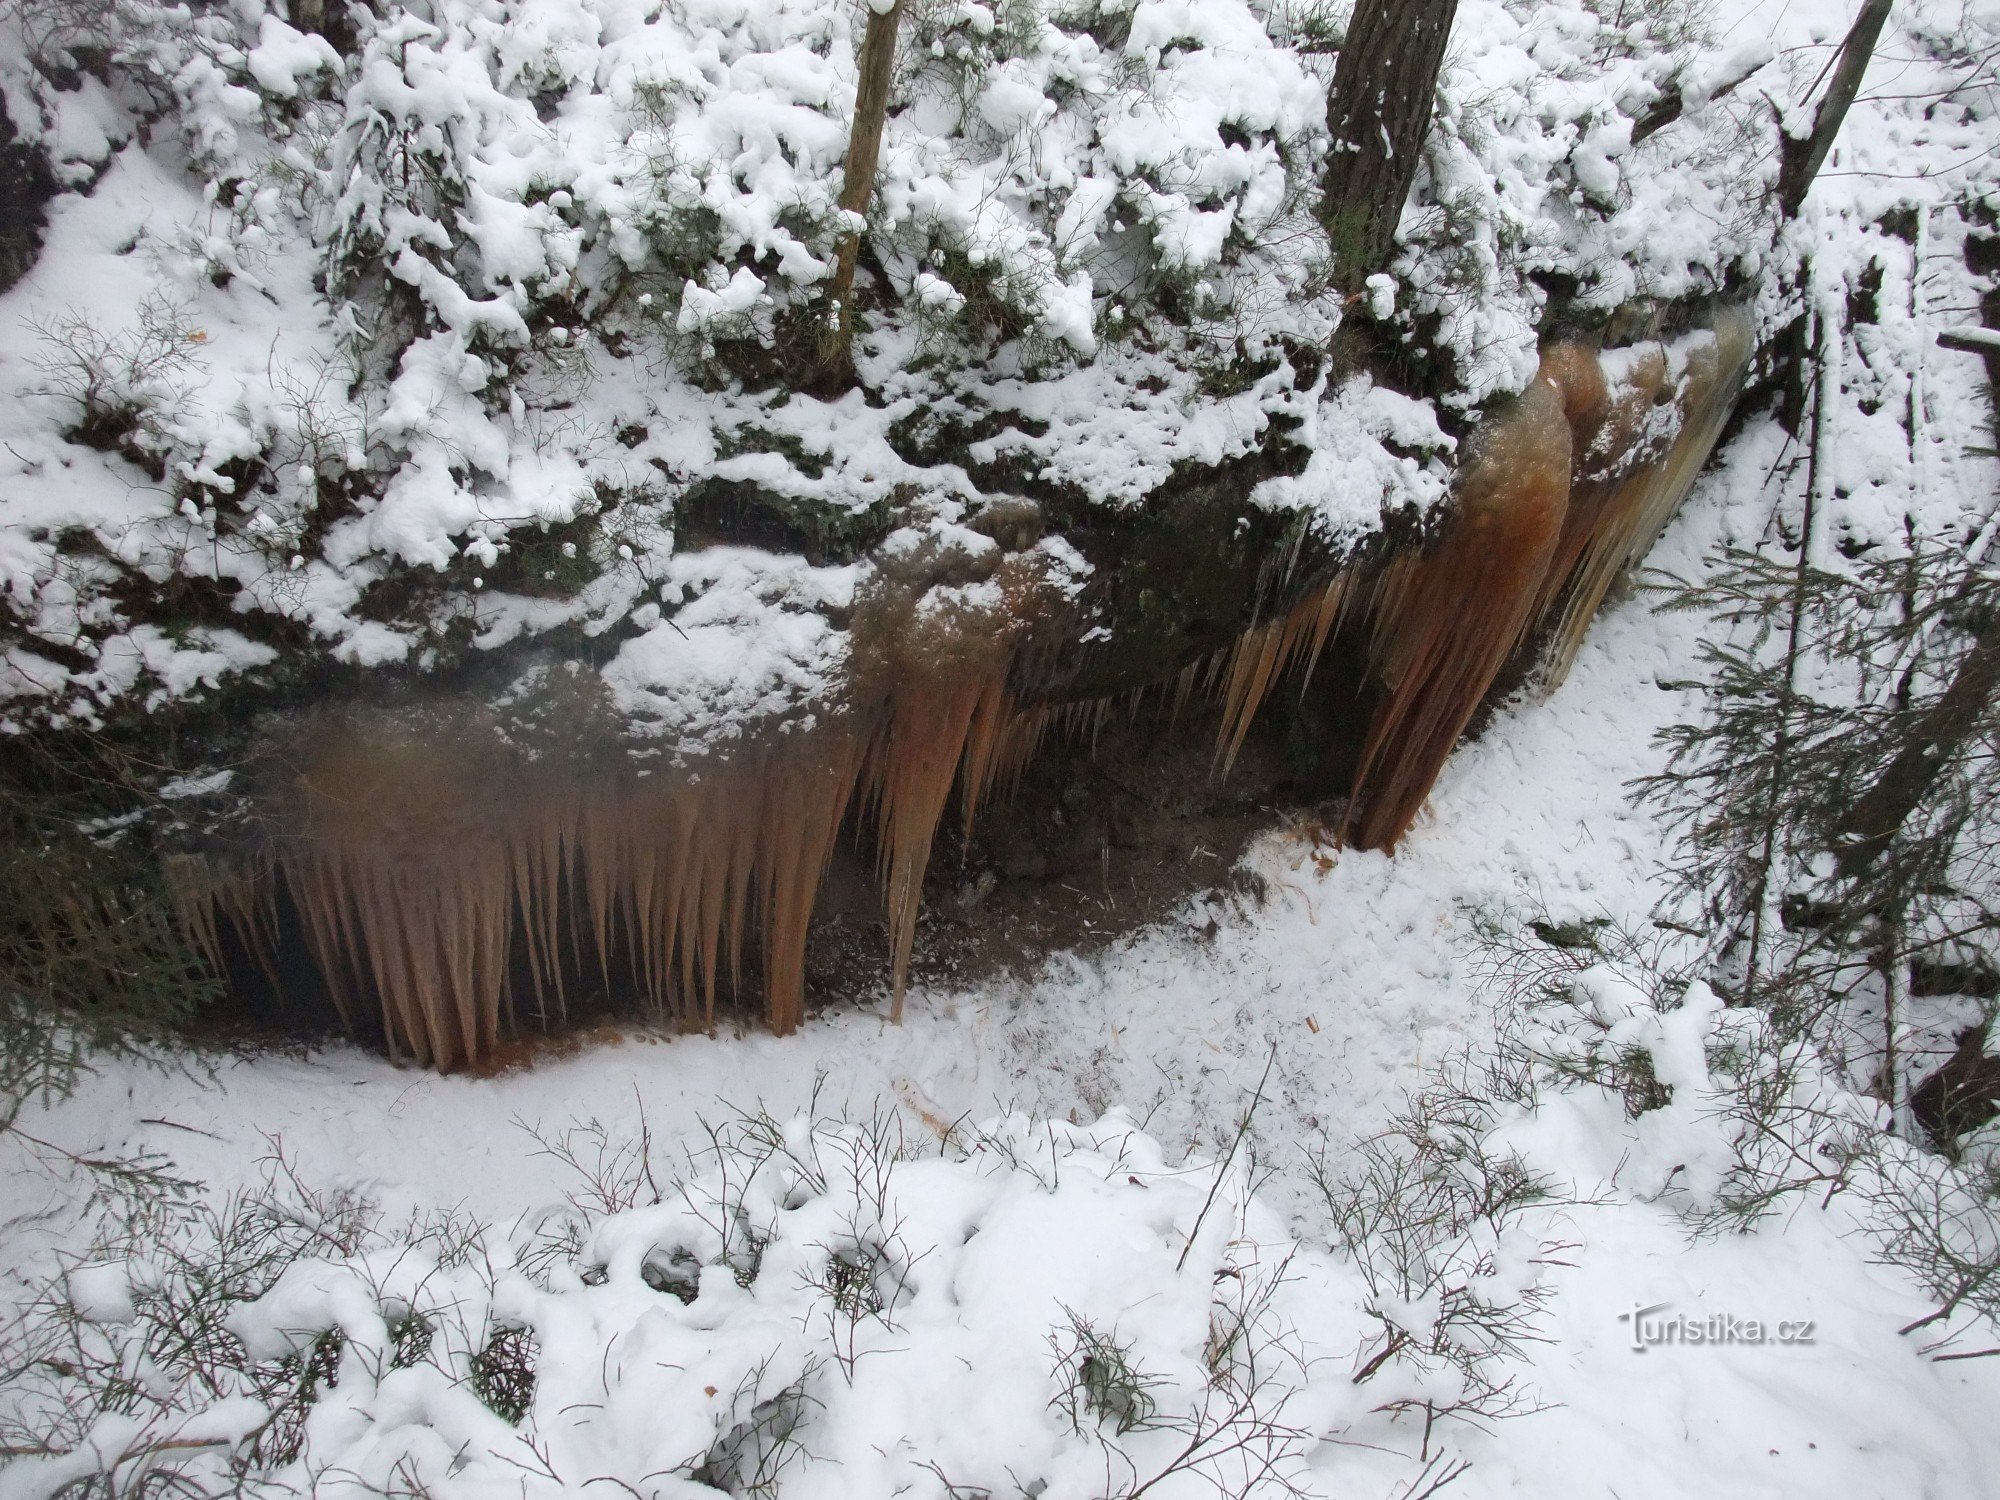 Icefalls gần Brtnické Castle